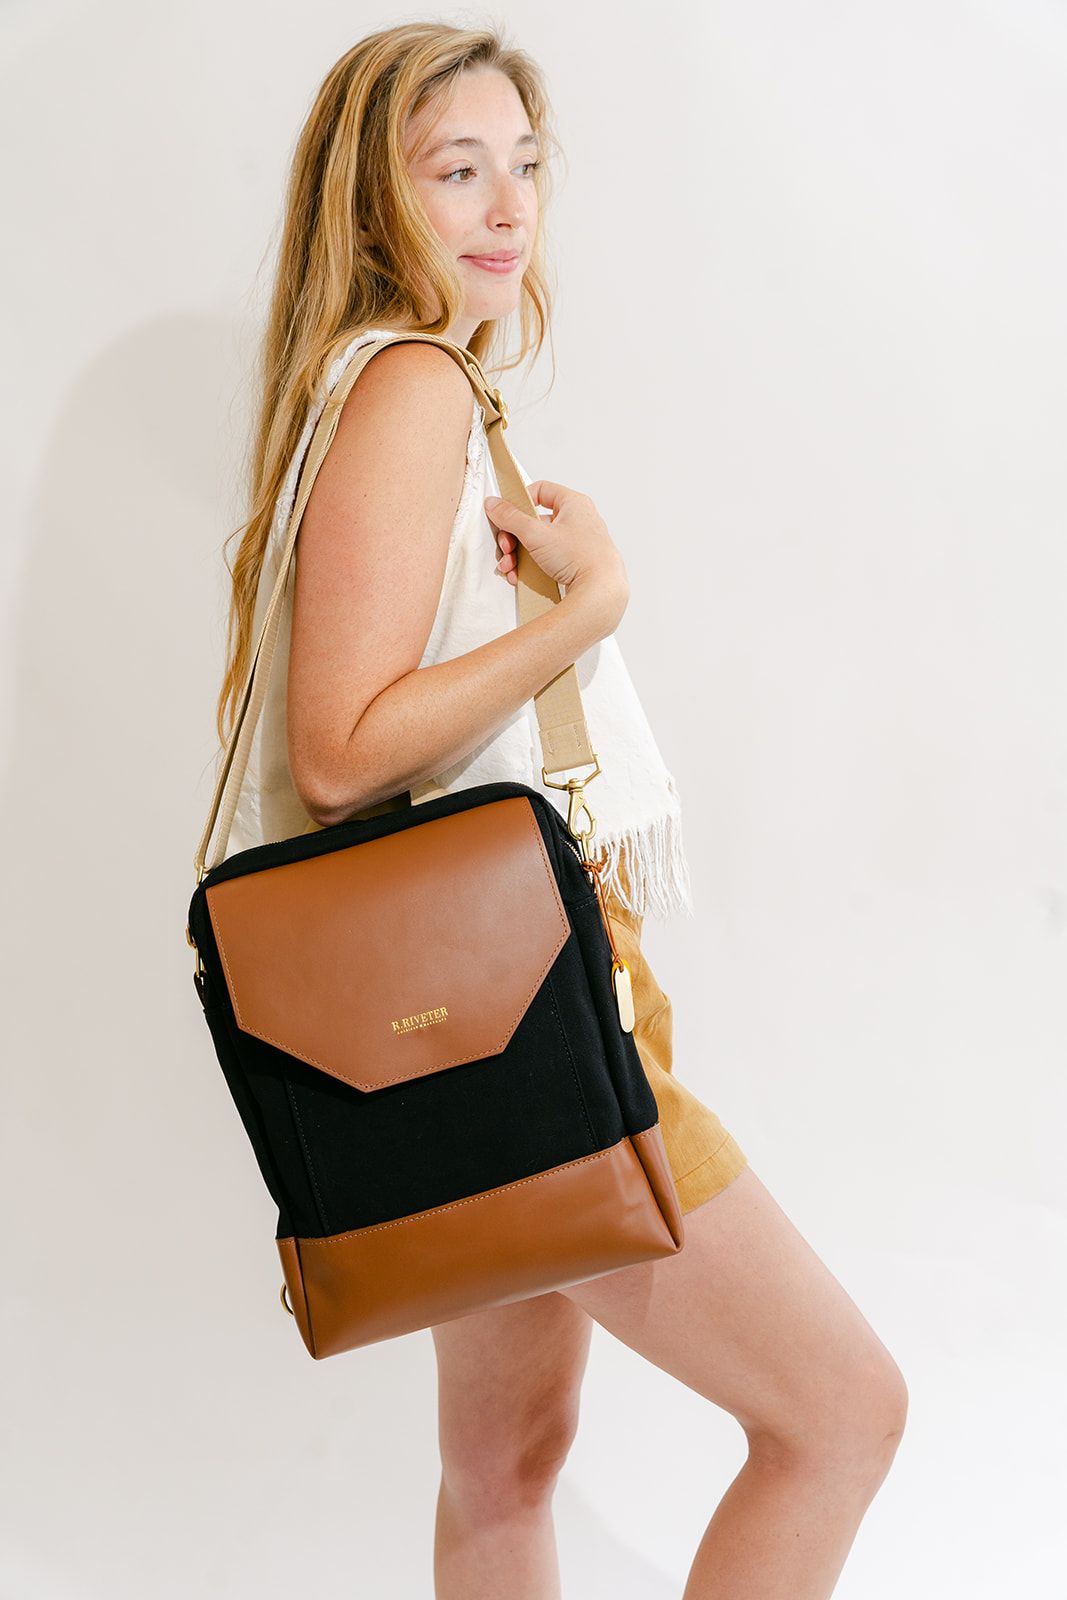 Margot Leather Backpacks